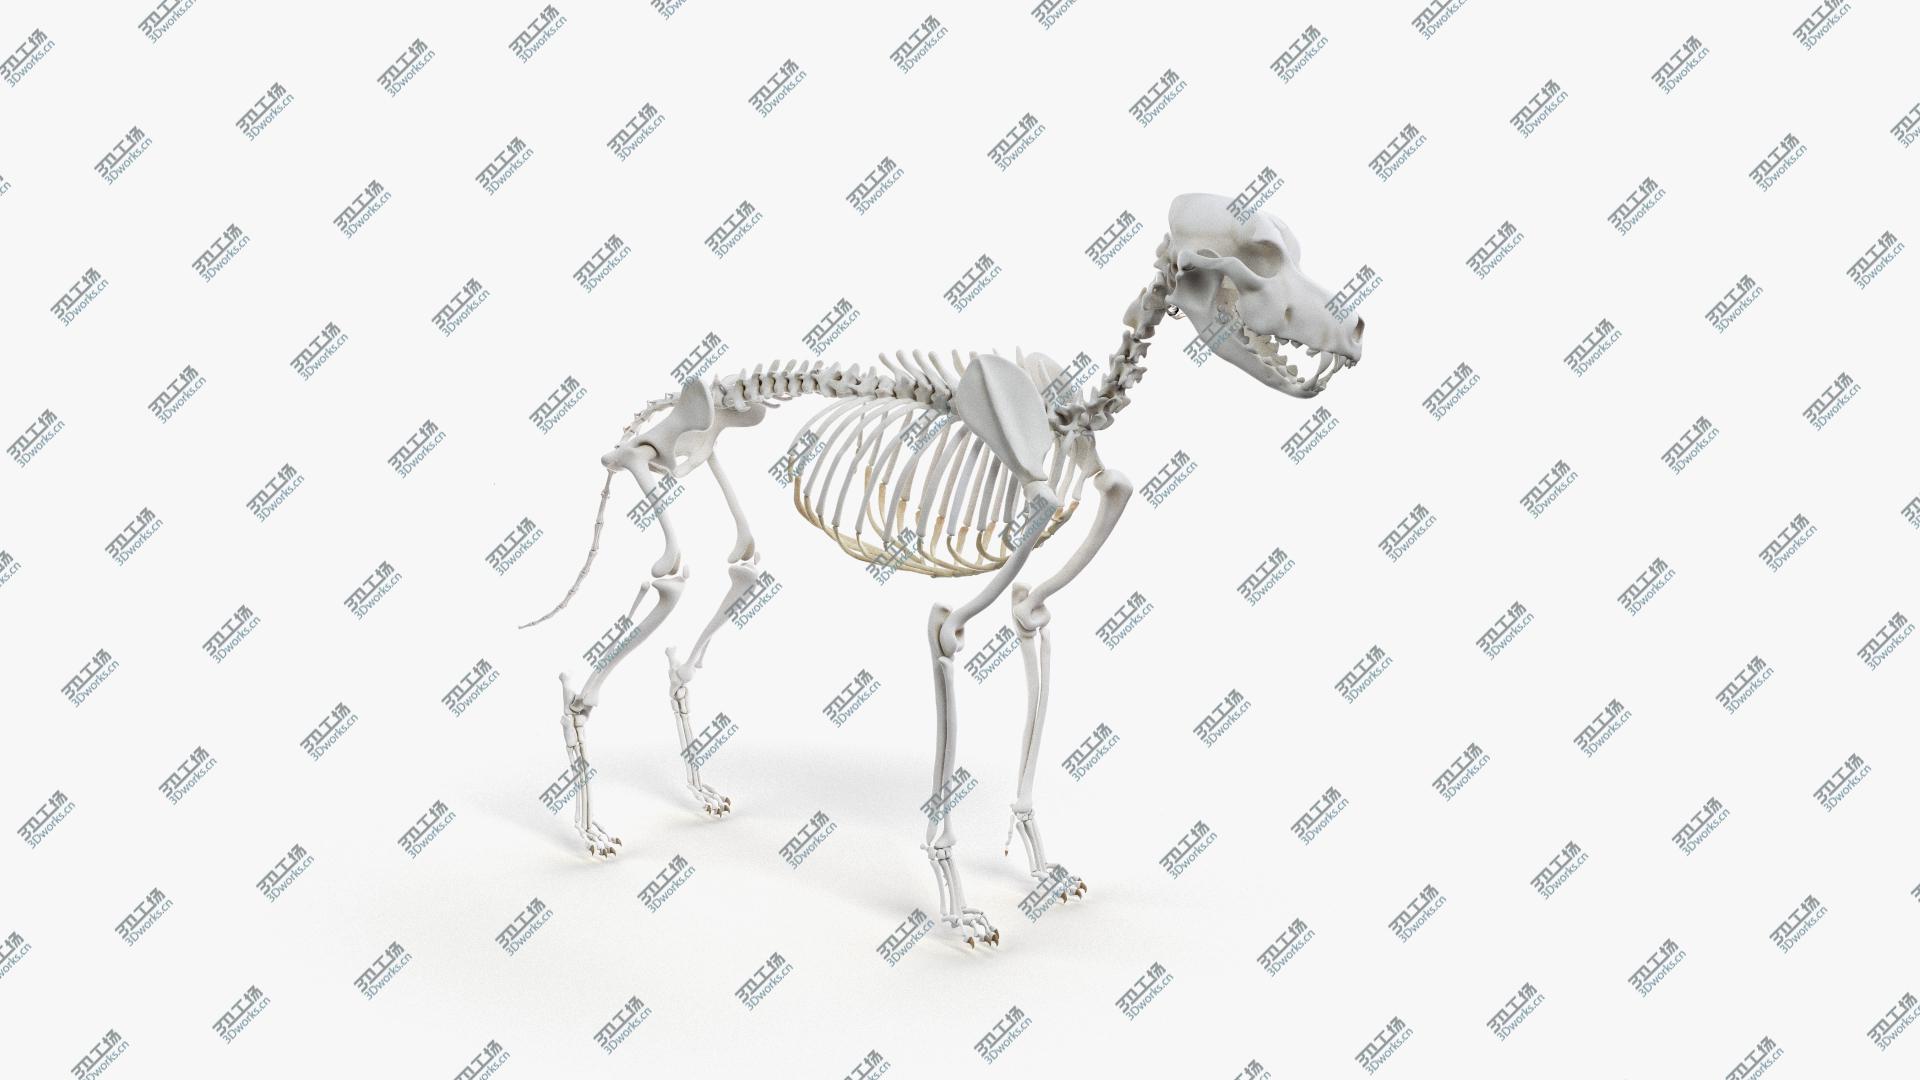 images/goods_img/202105071/Dog Skin And Skeleton Animated model/5.jpg